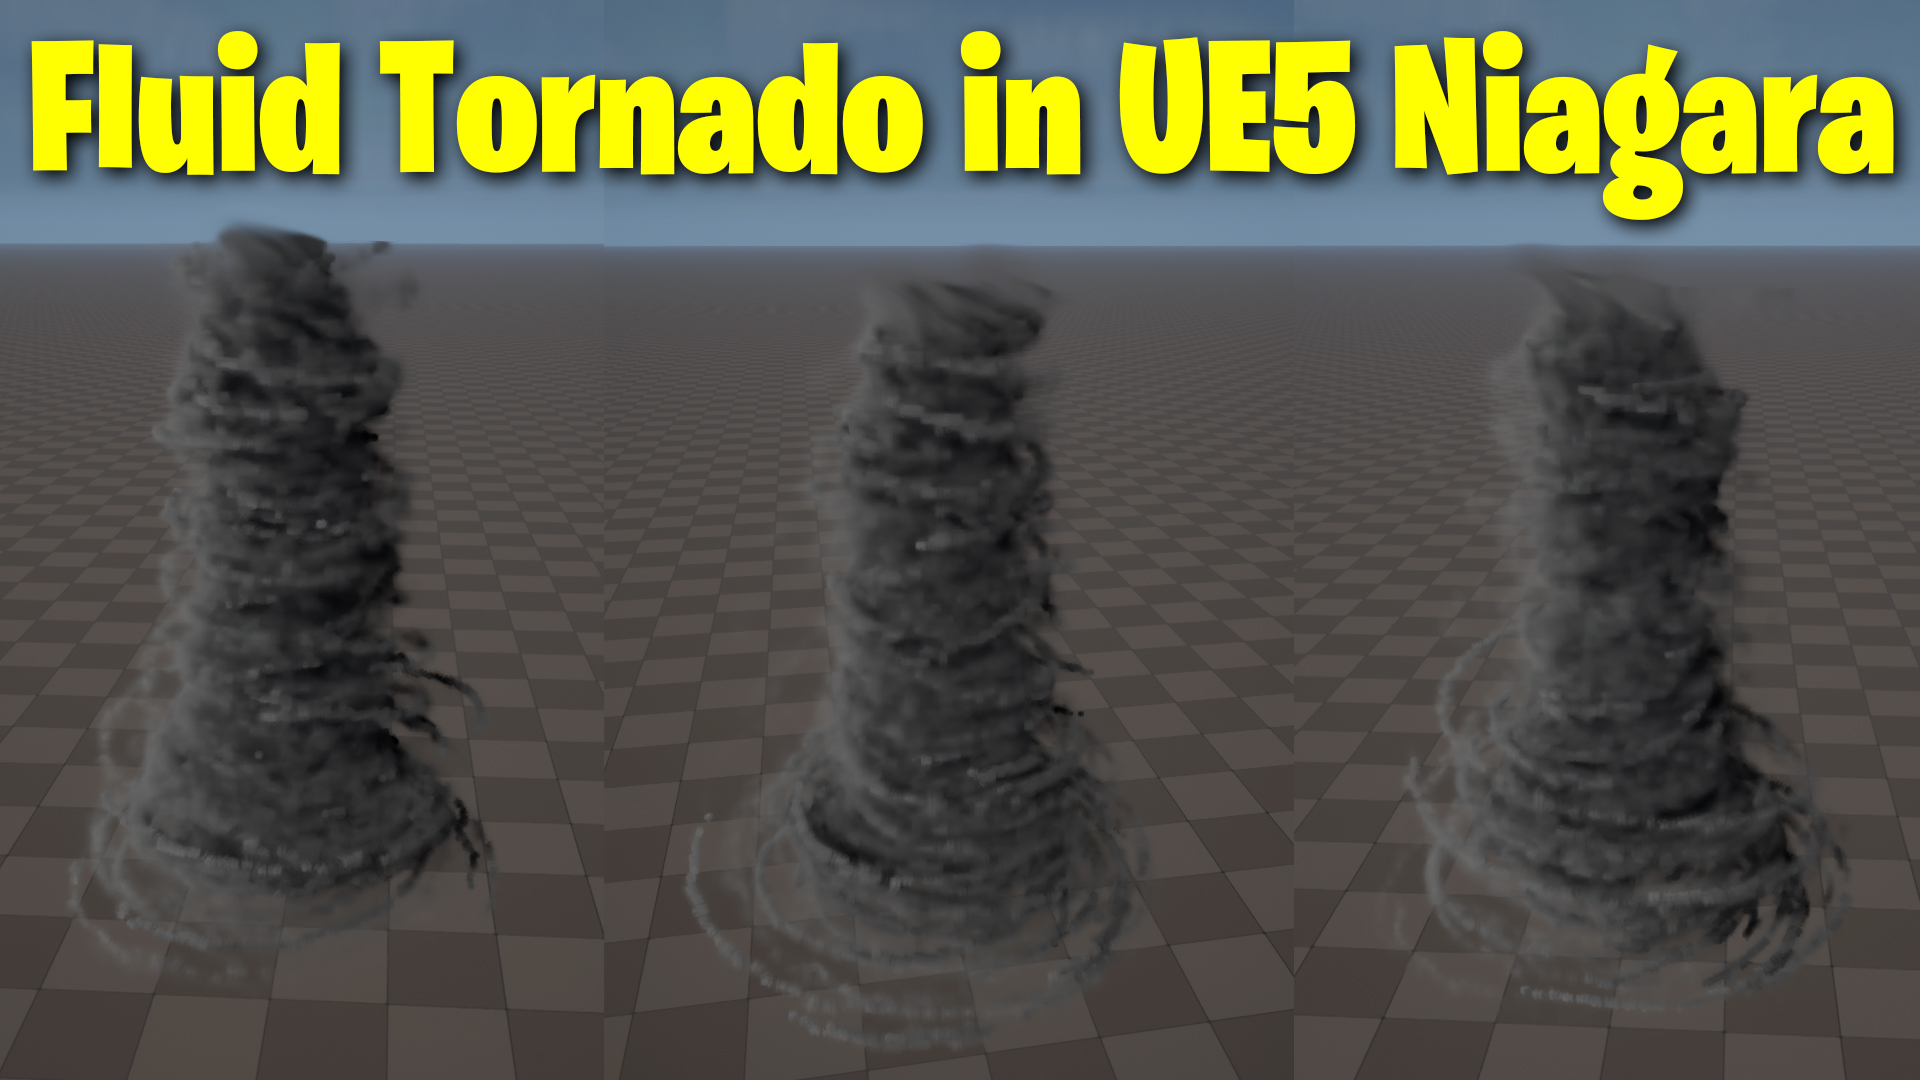 Fluid Tornado in UE5 Niagara Tutorial